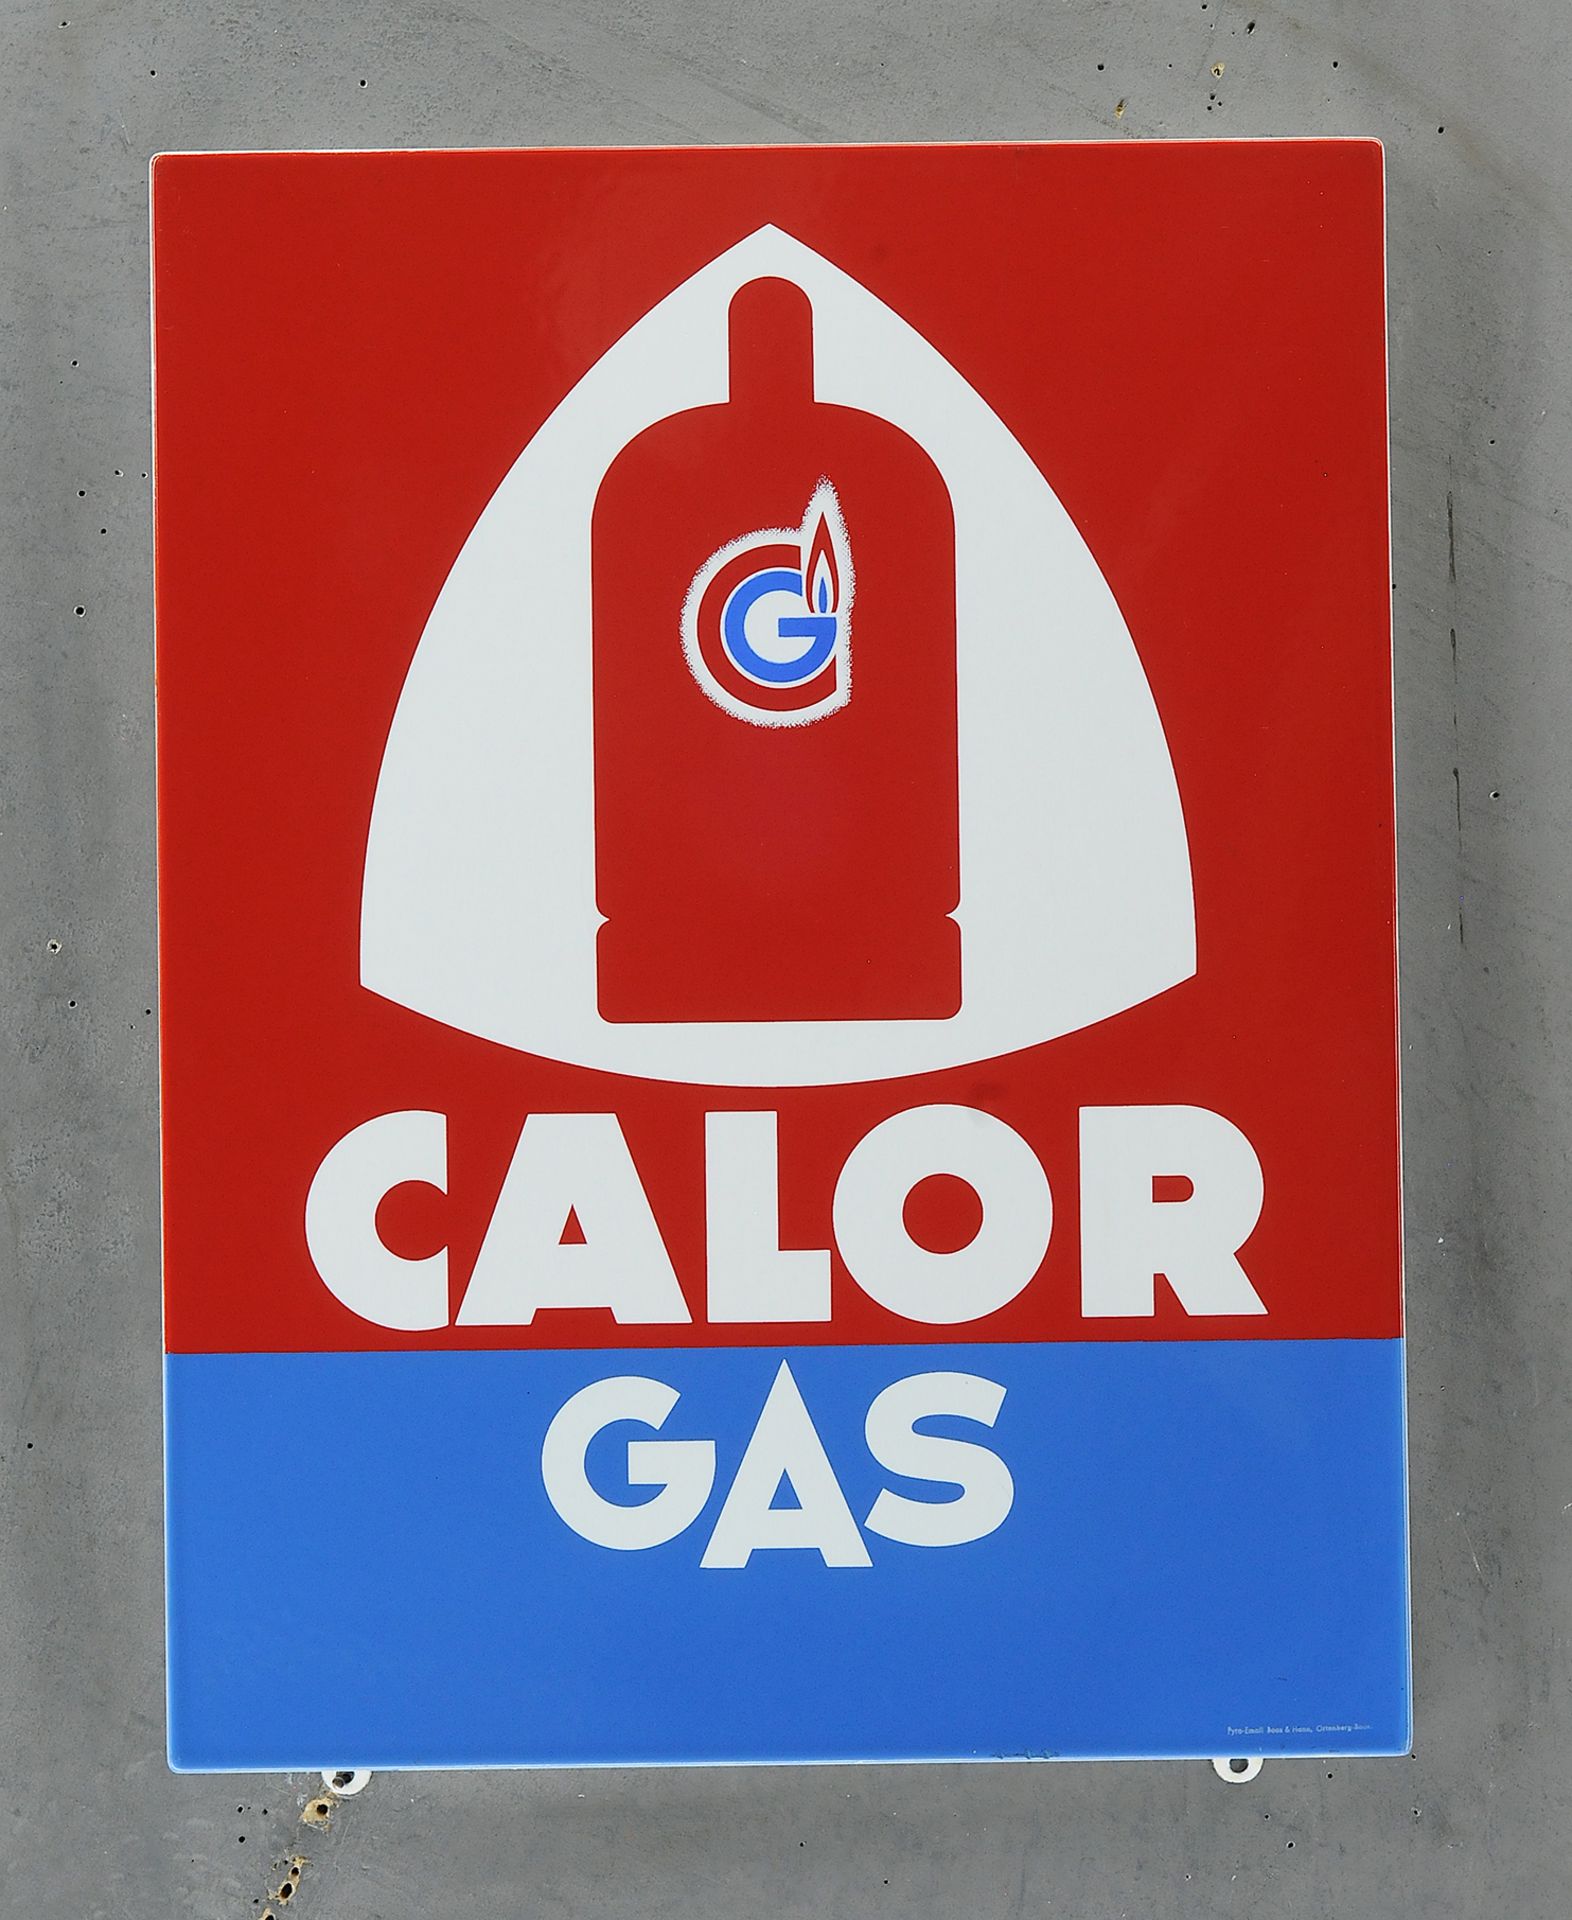 Calor Gas "G" - Image 3 of 3